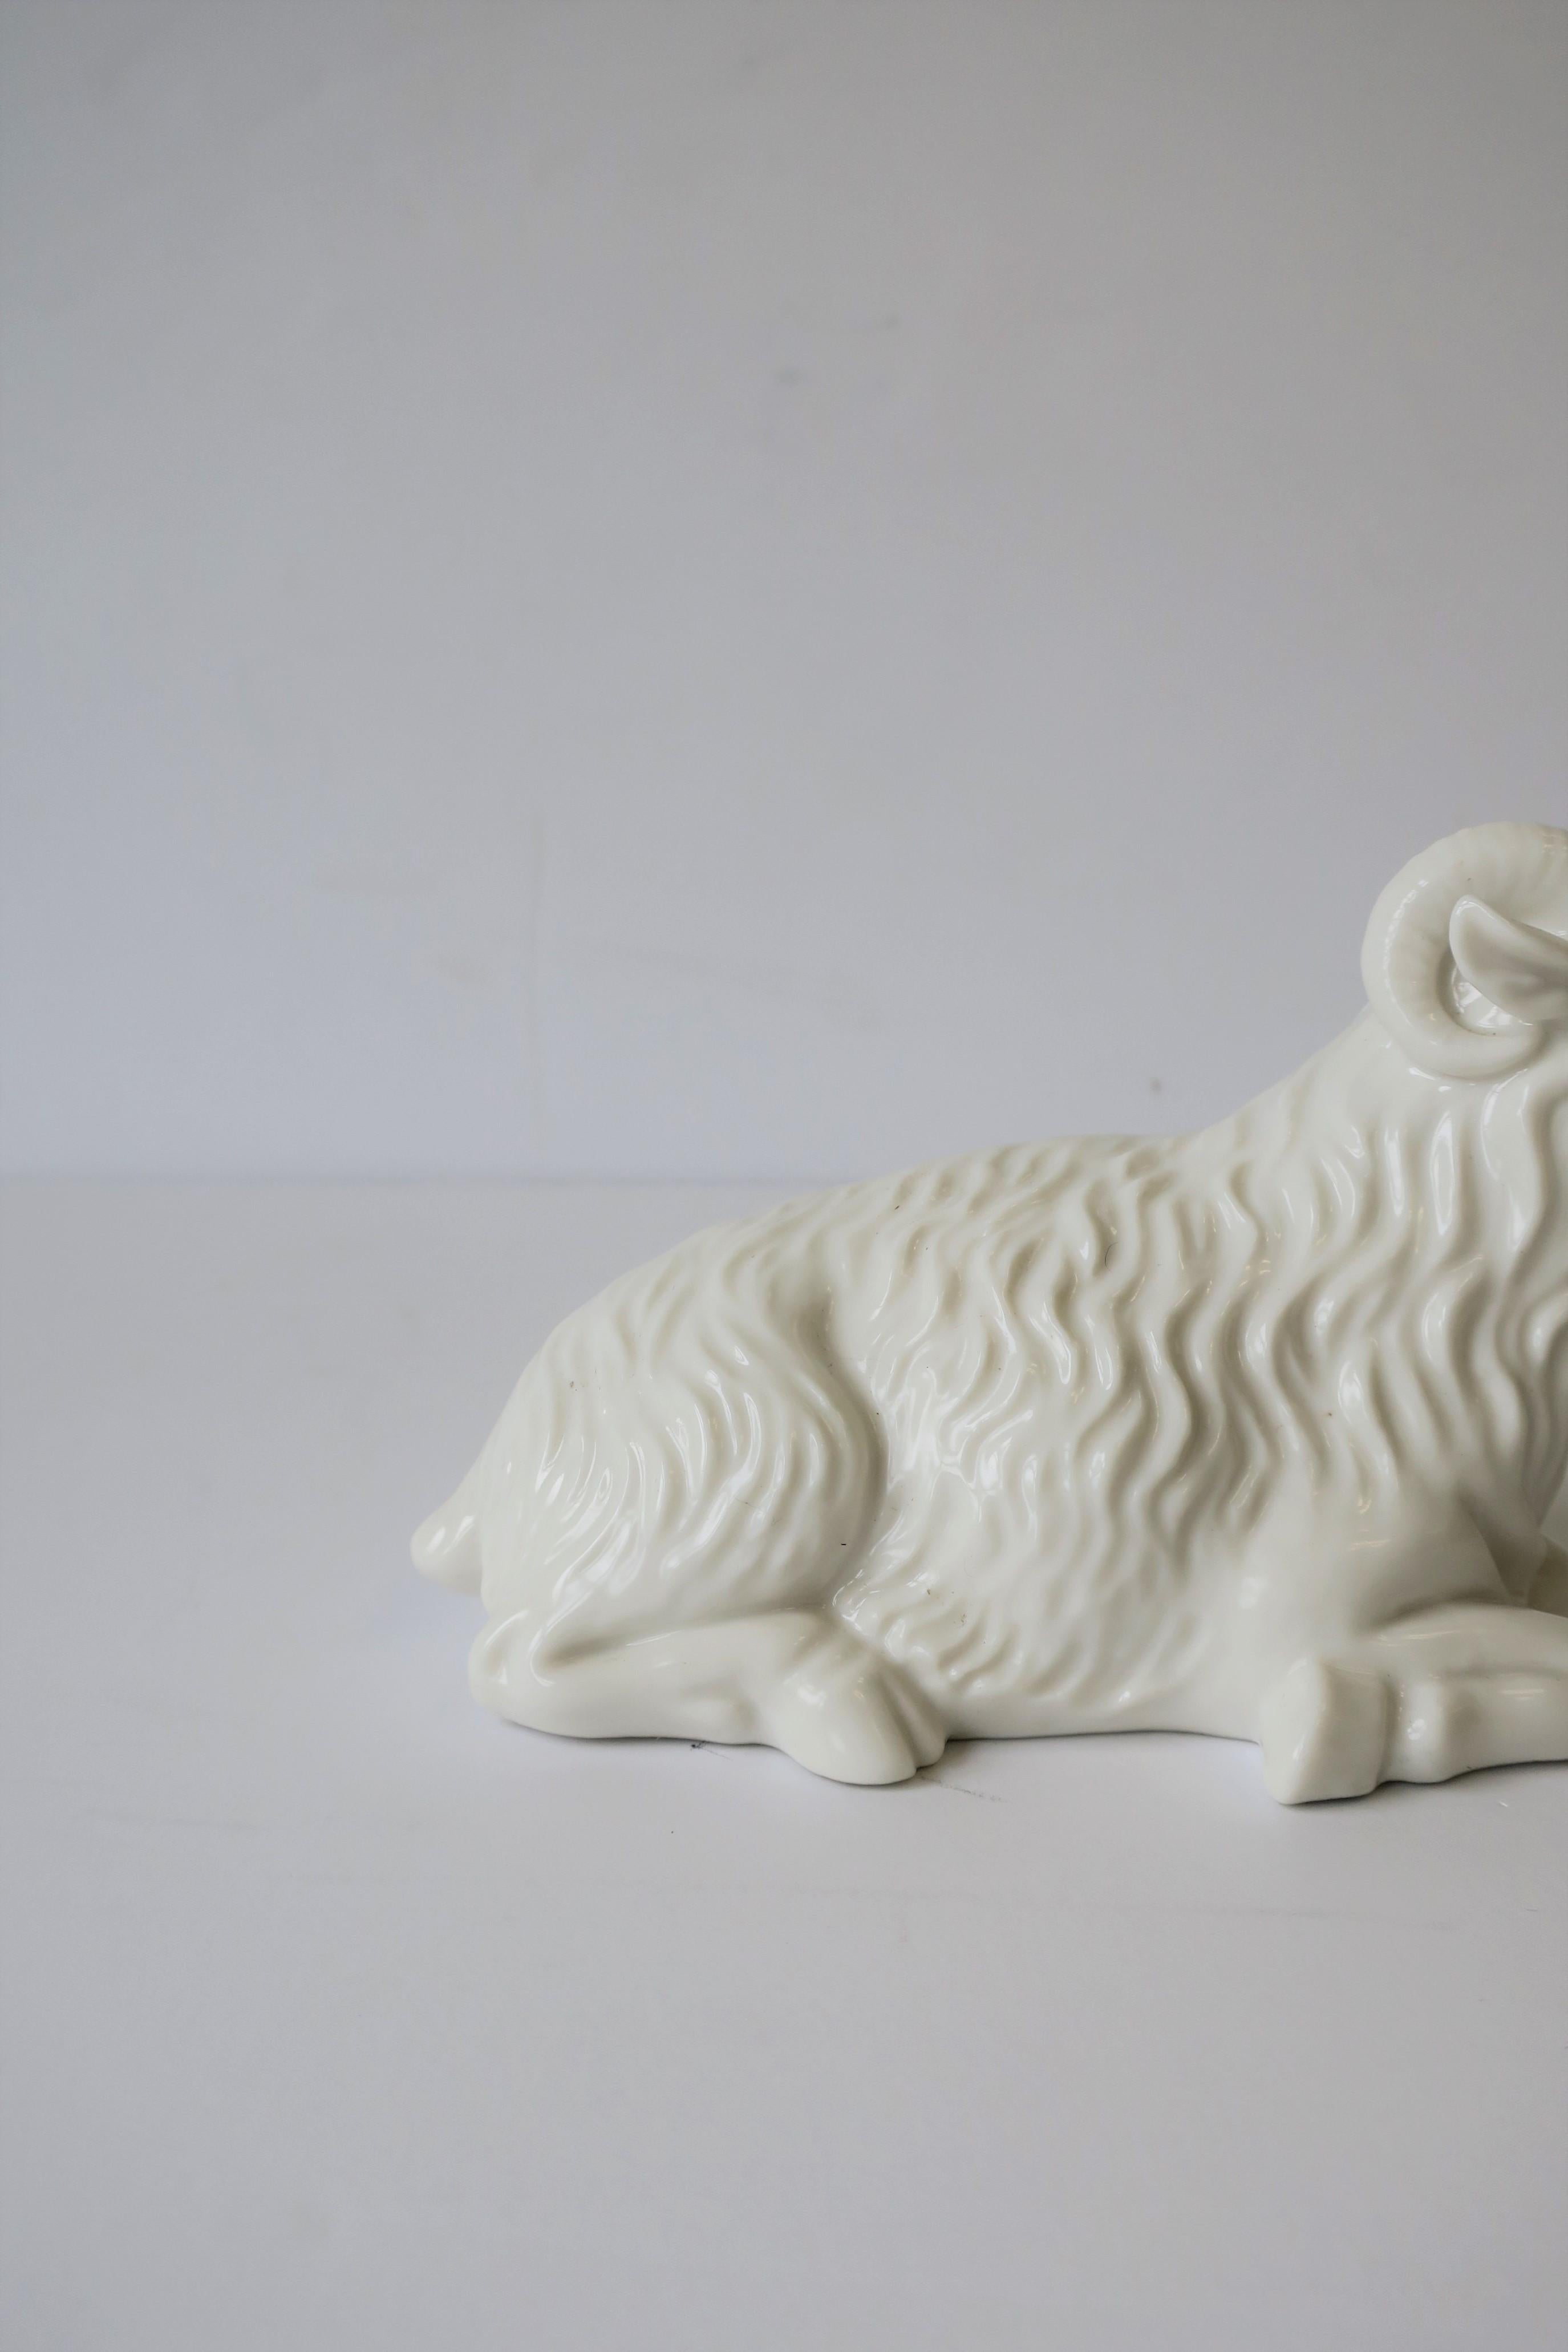 White Porcelain Animal Ram Sculpture 1